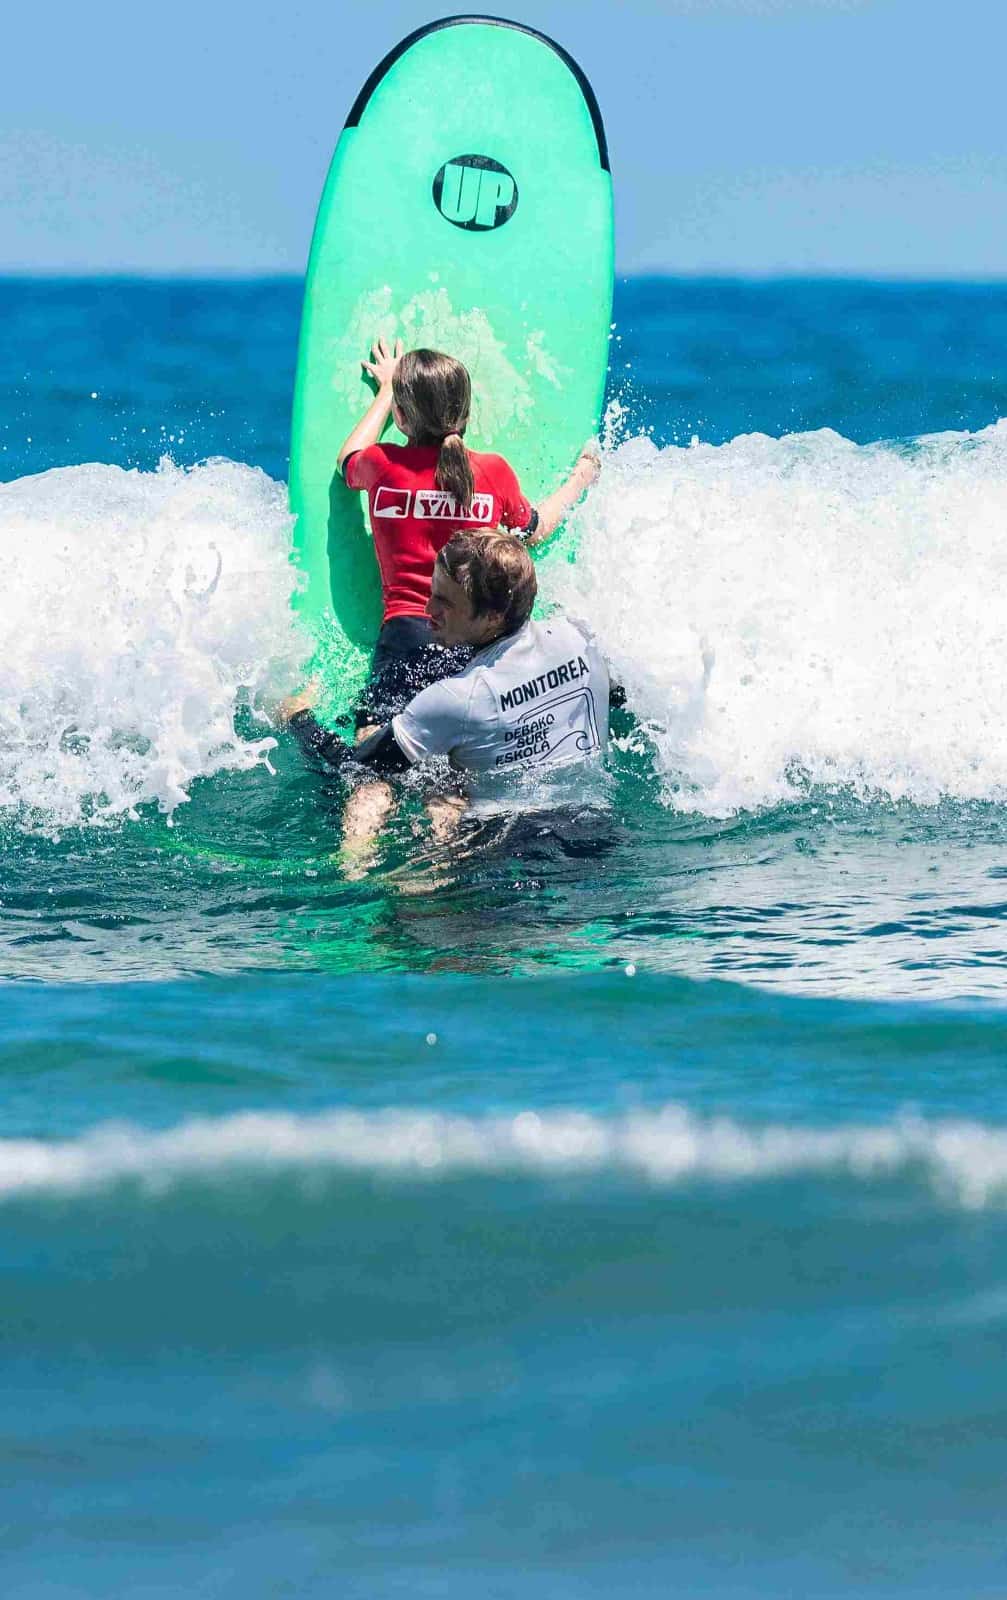 Clase de surf privada con “Yako Surf” 🏄‍♂️